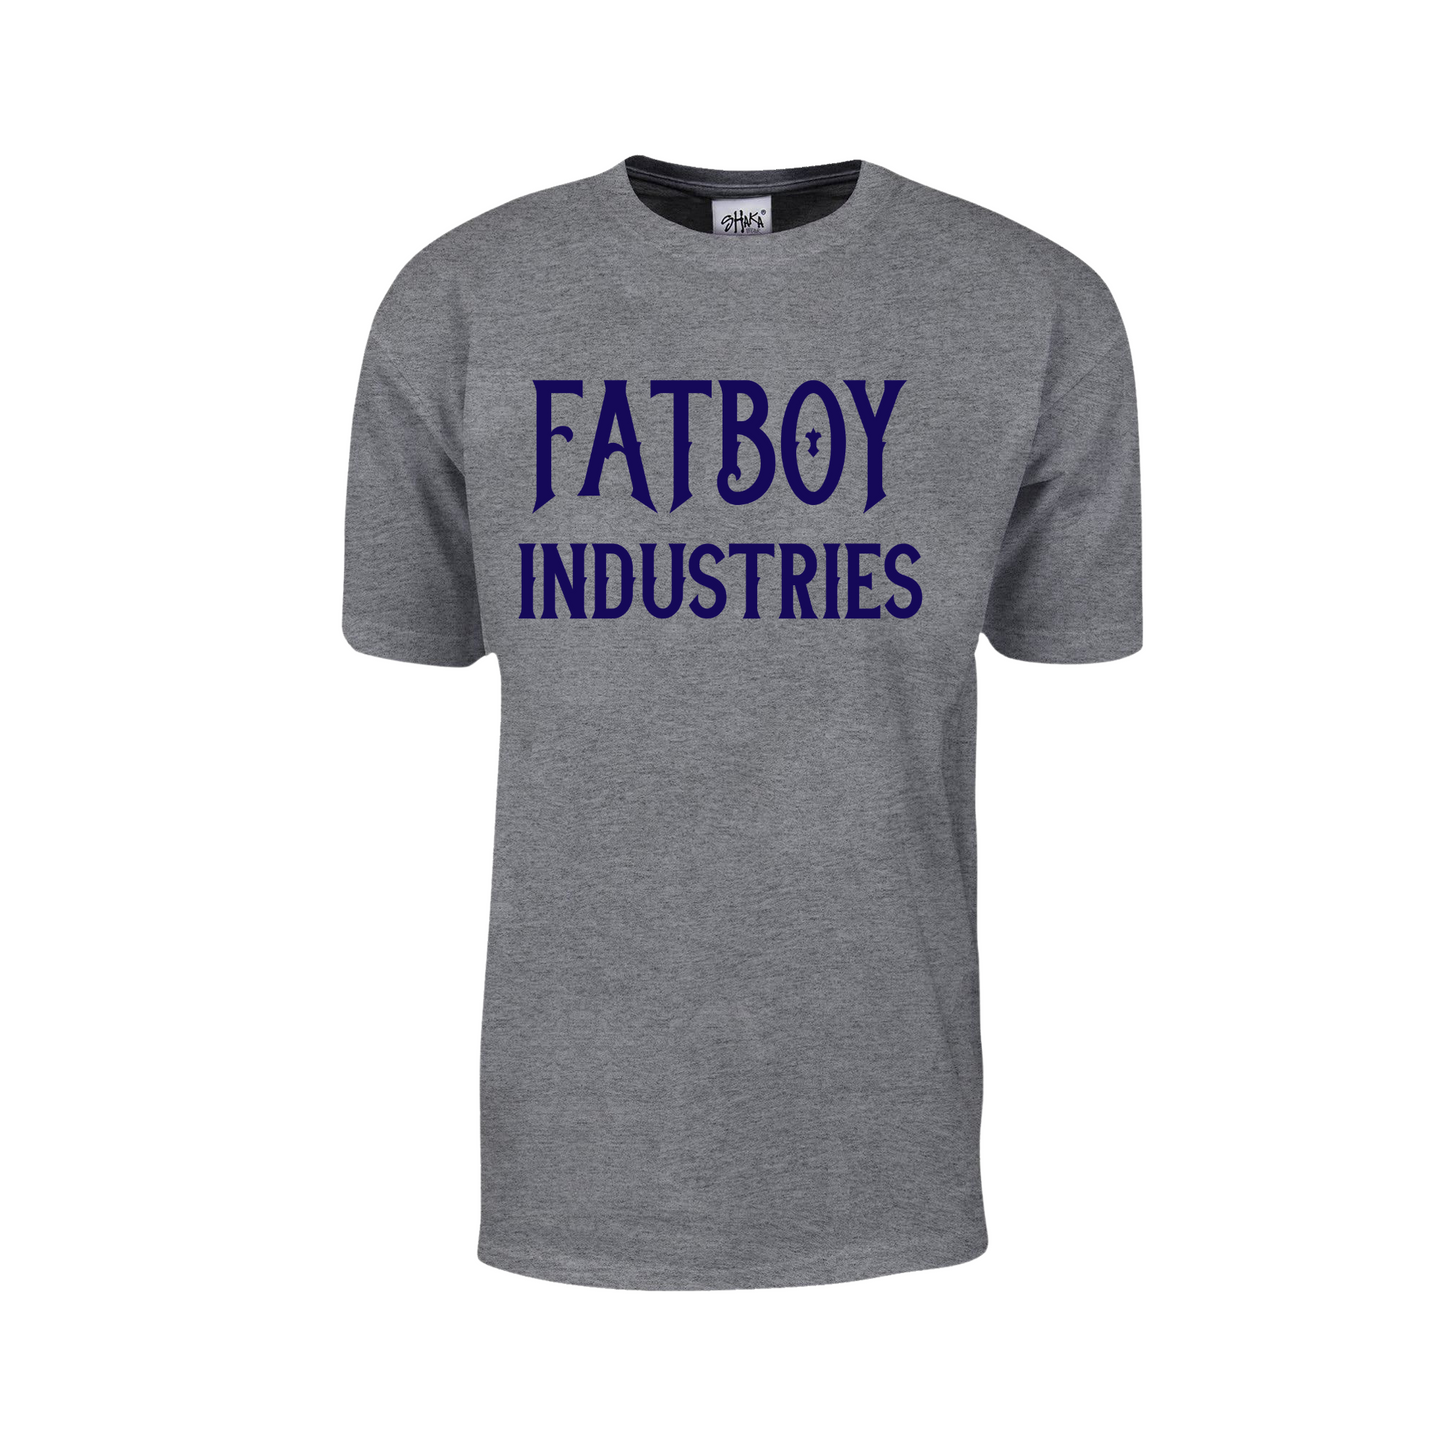 Fatboy Industries - Navy Blue